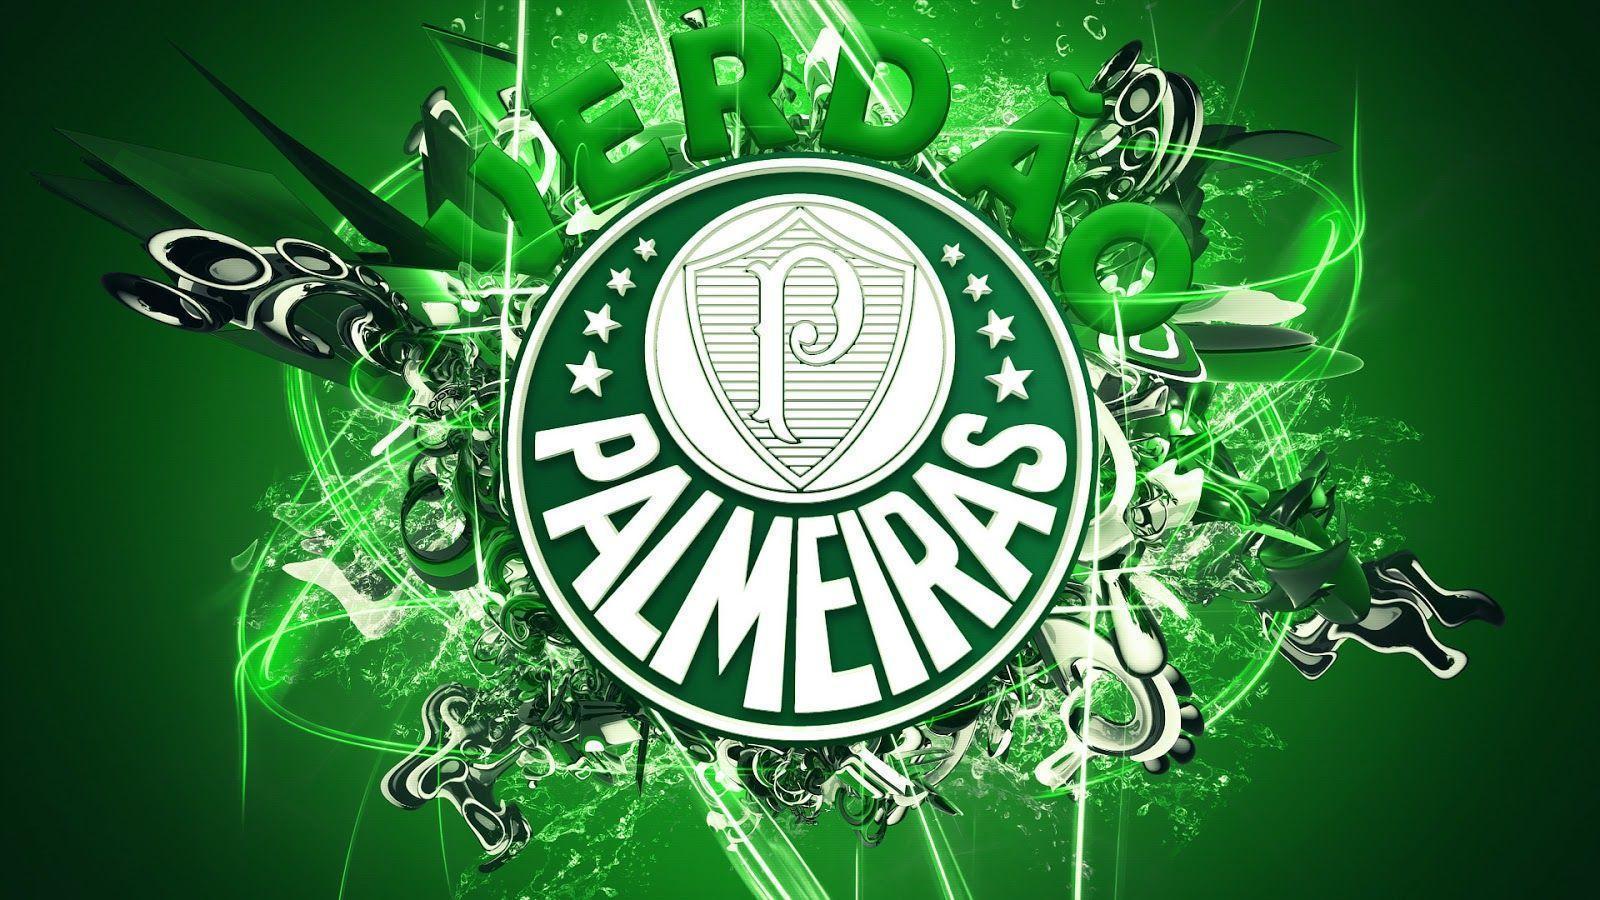 Palmeiras Wallpaper HD. Full HD Picture